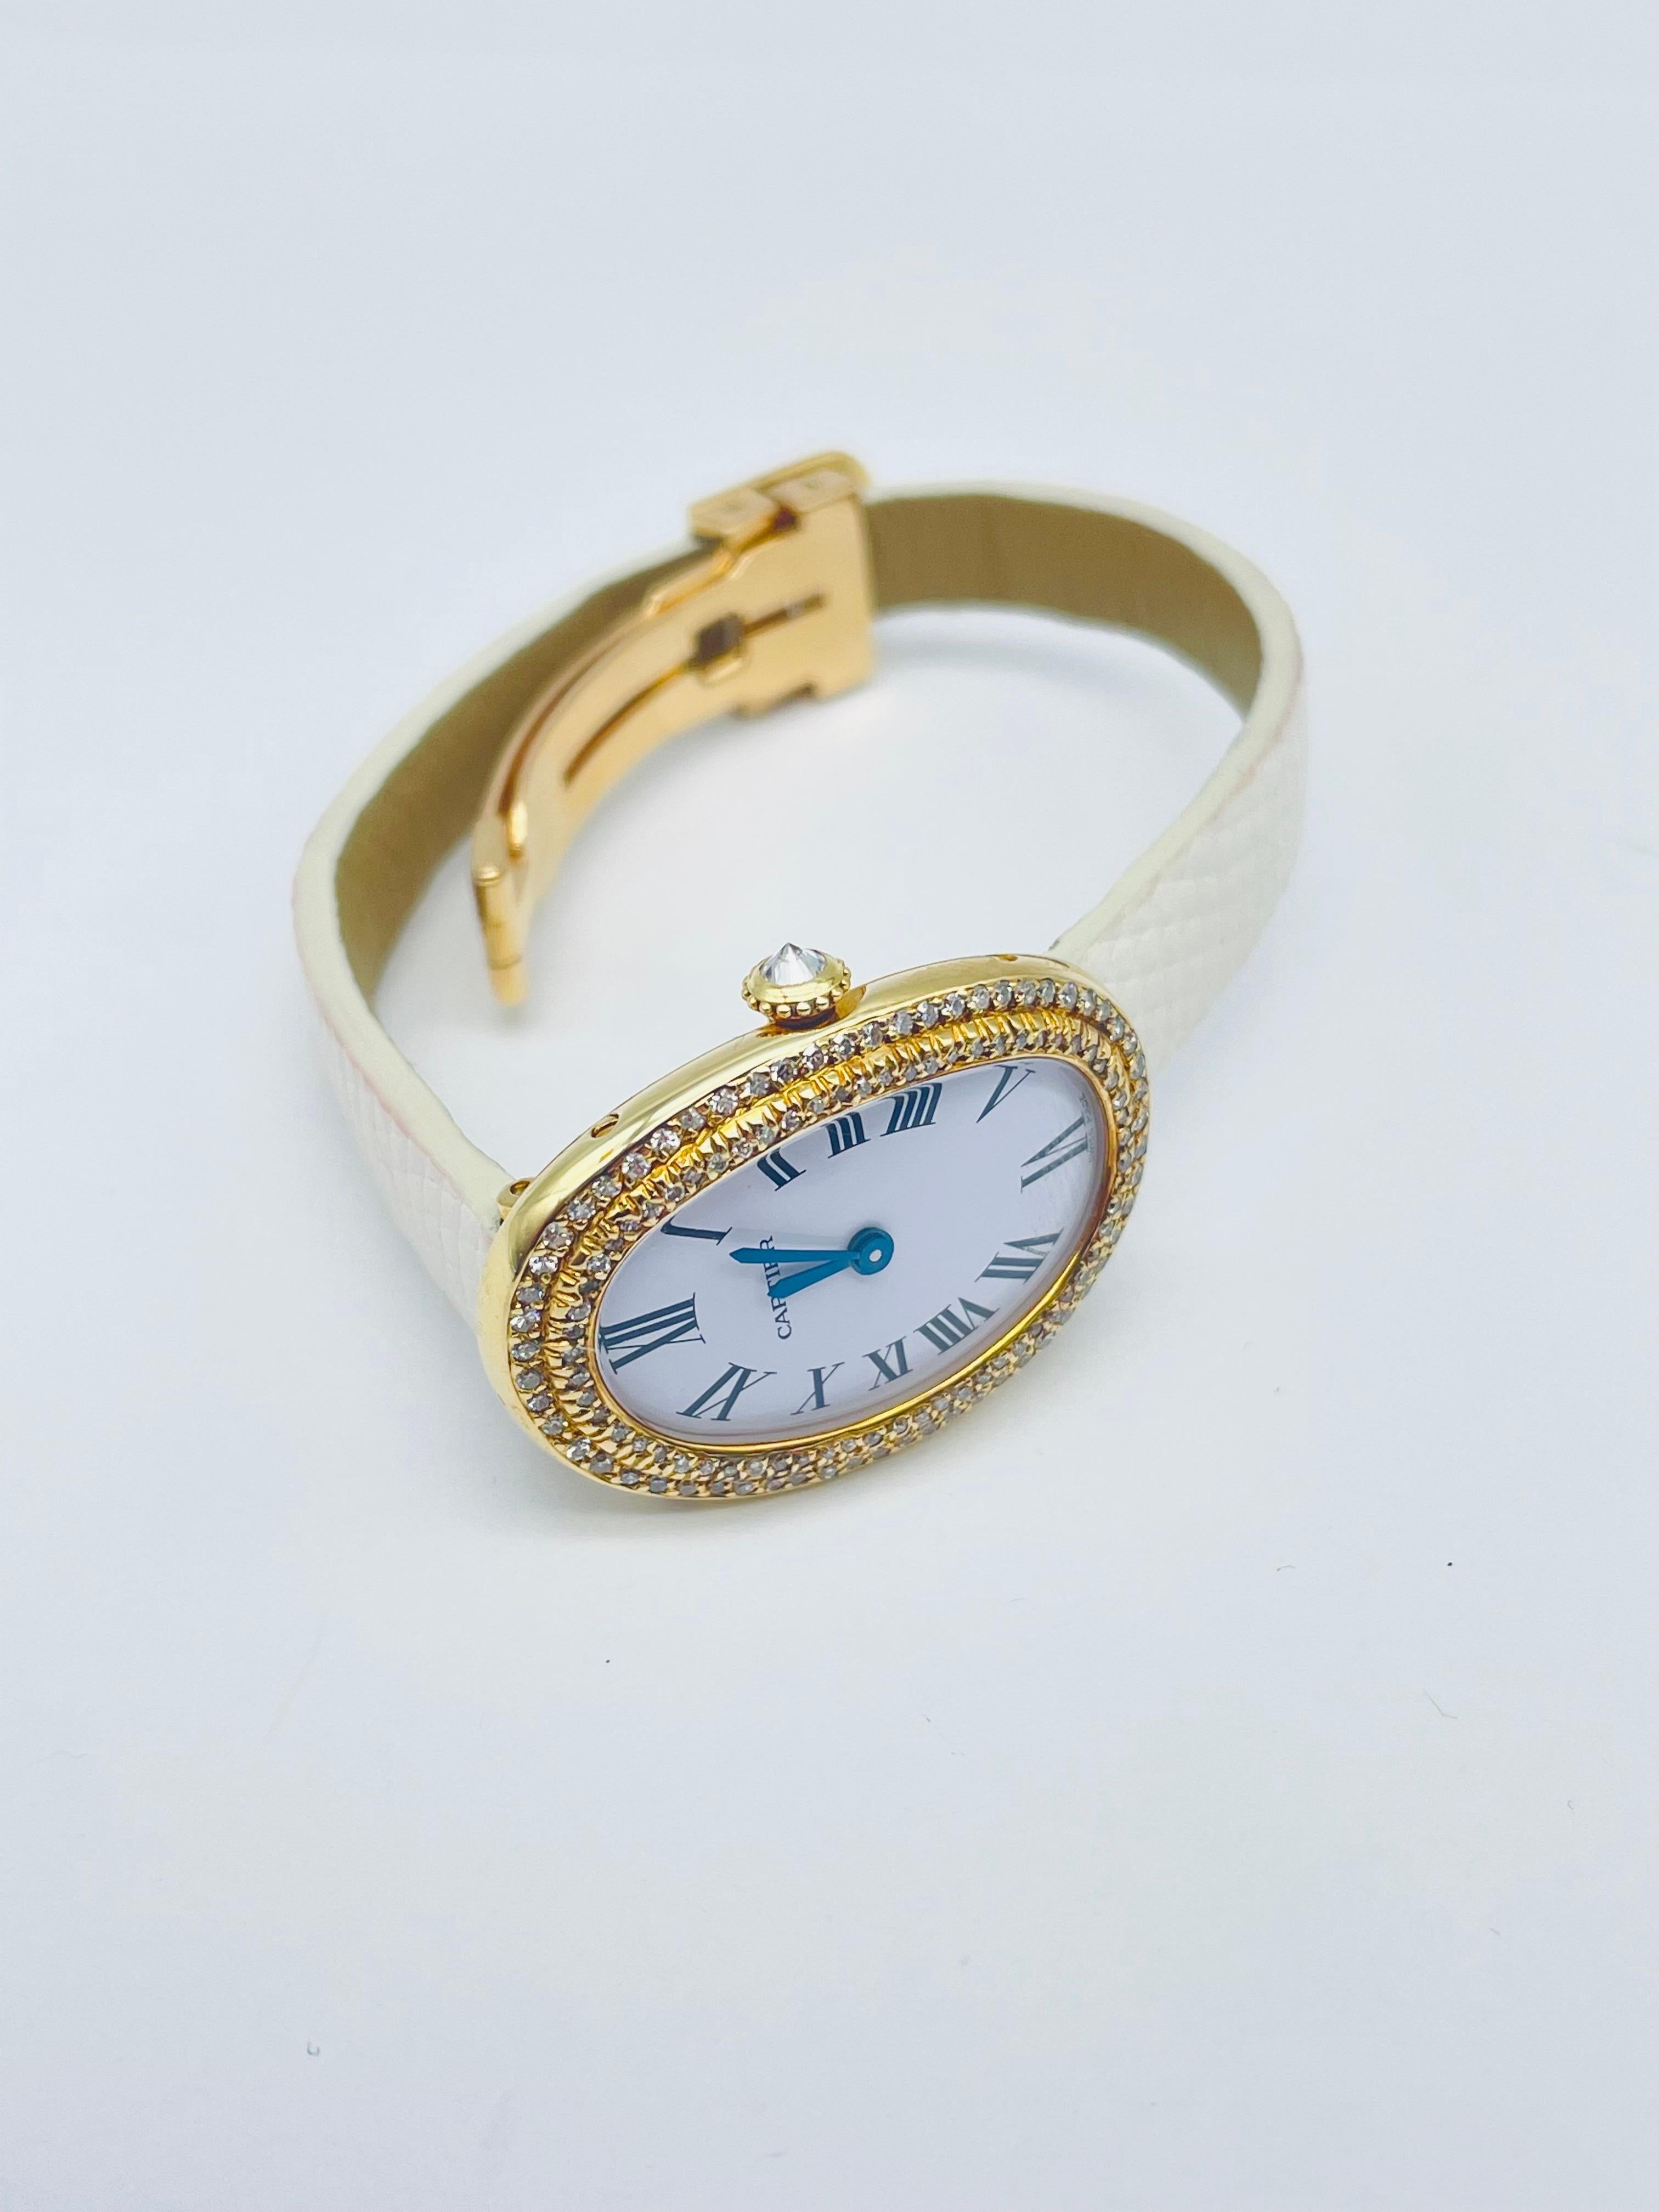 cartier baignoire diamond watch